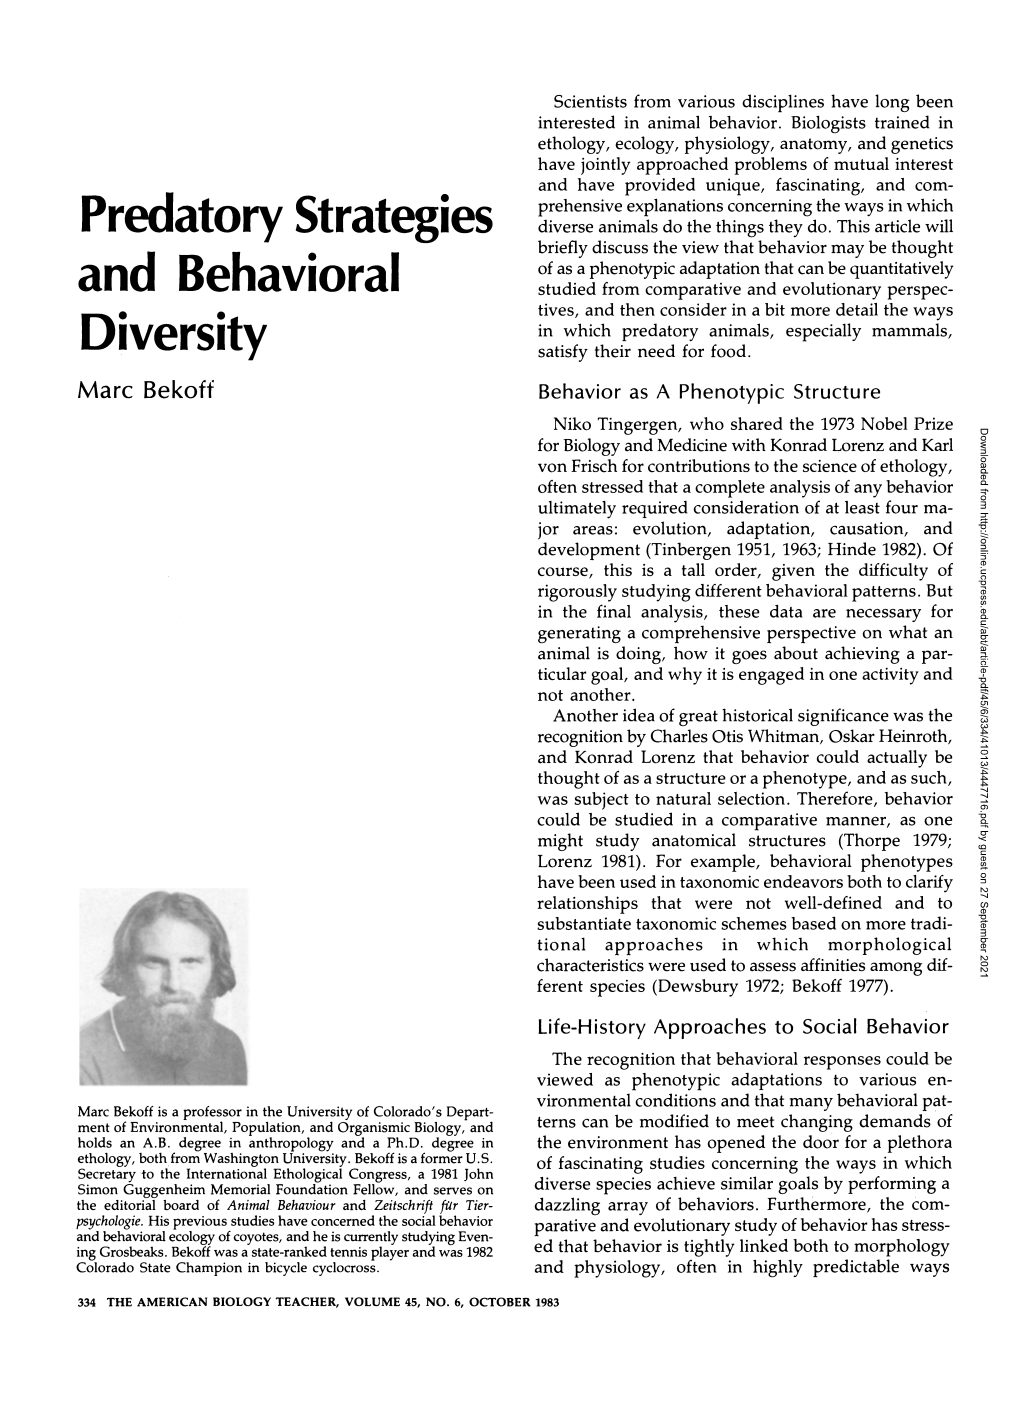 Predatory Strategies and Behavioral Diversity